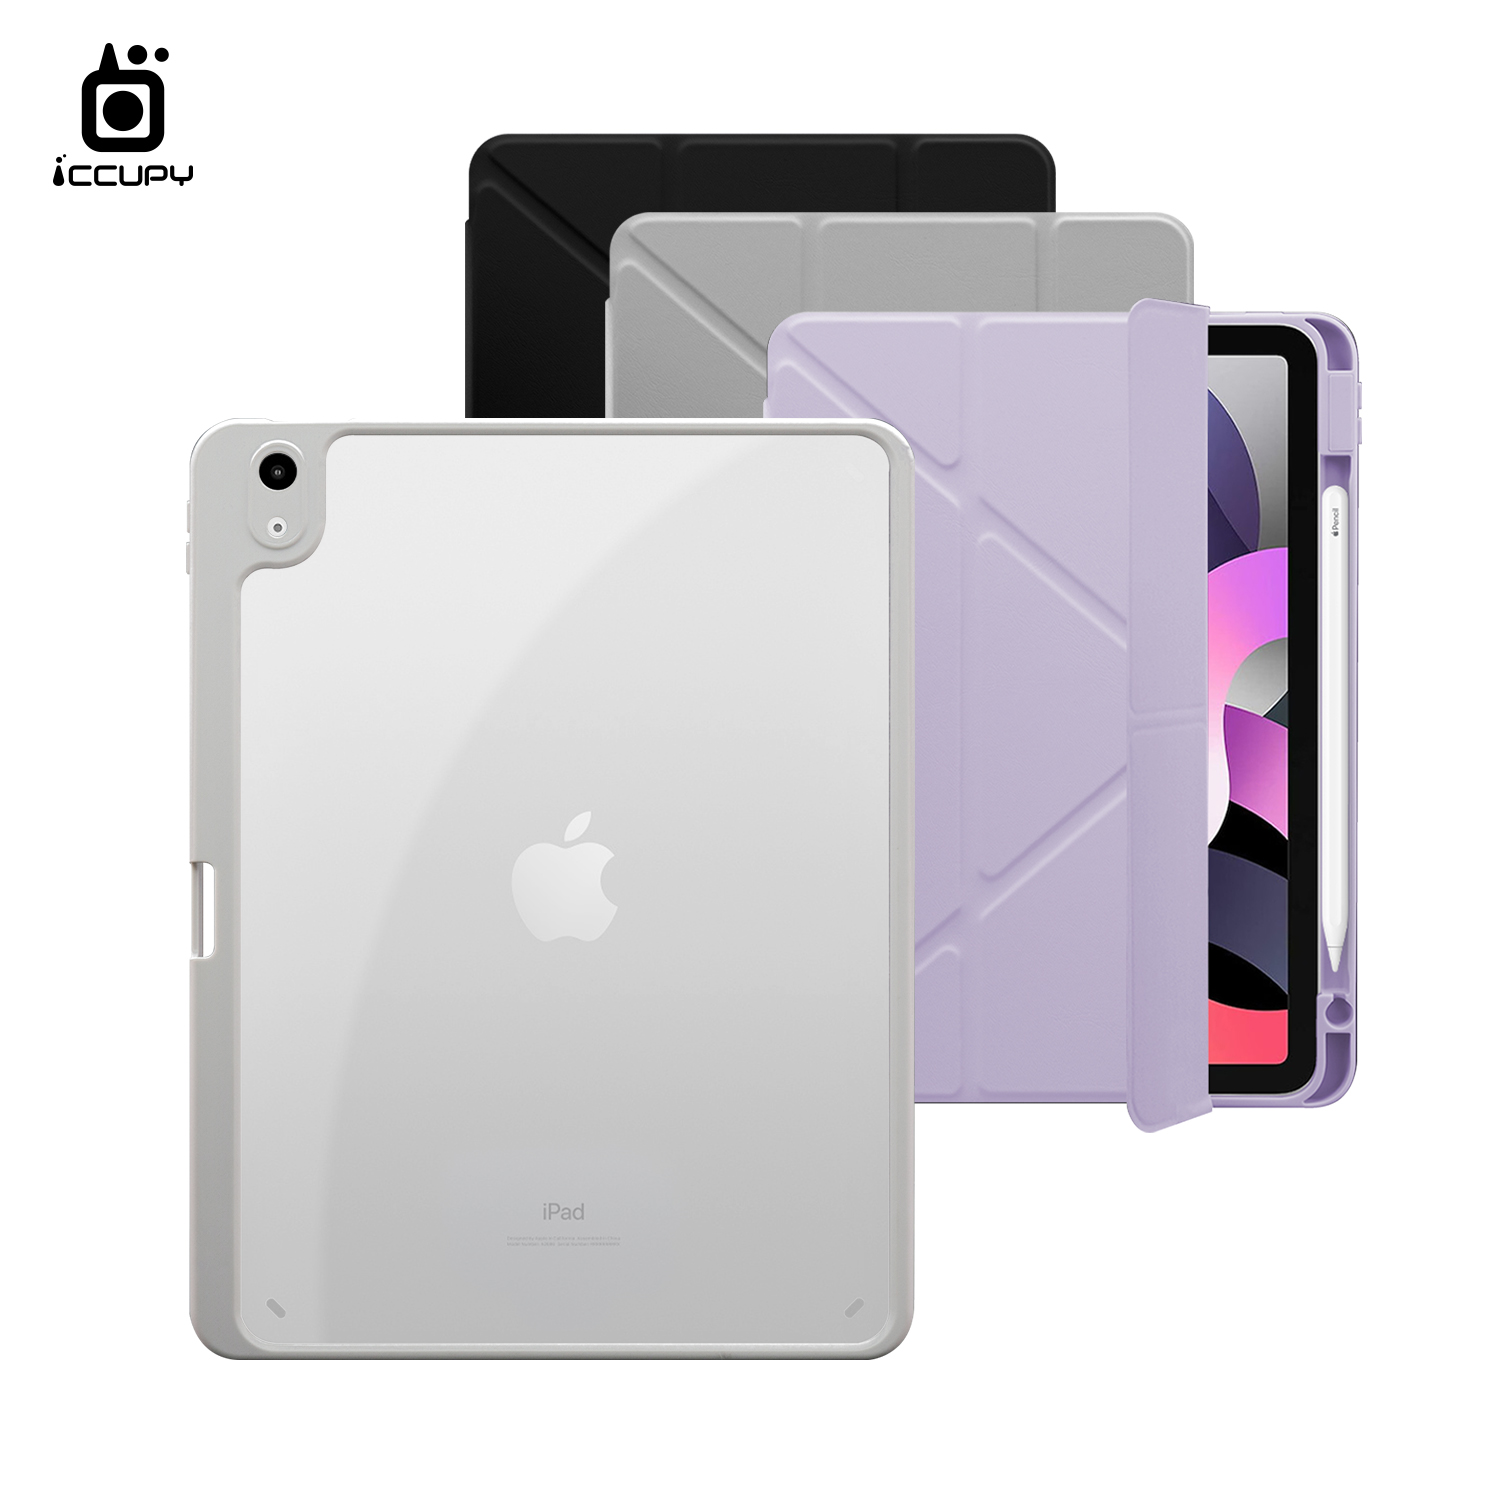 【iCCUPY黑占盾For iPad】黑占盾平板SN系列-卡扣式拆裝兩用(共三色) For iPad 第10代 10.9吋